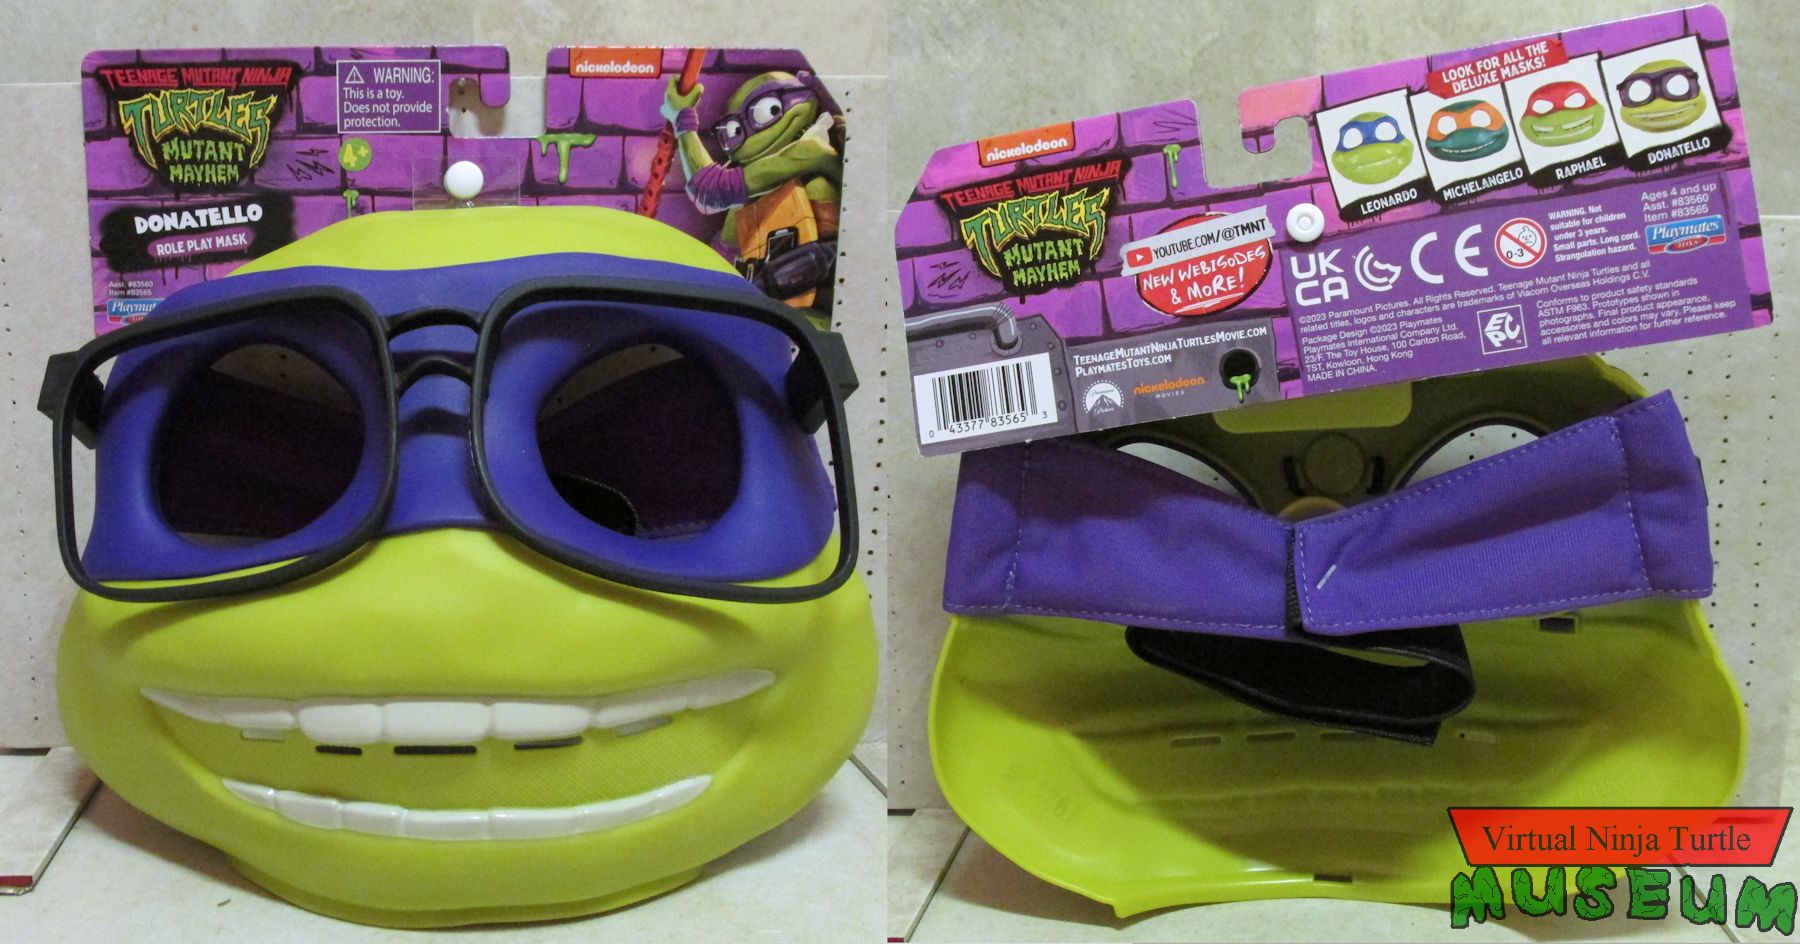 Donatello Mask front and back